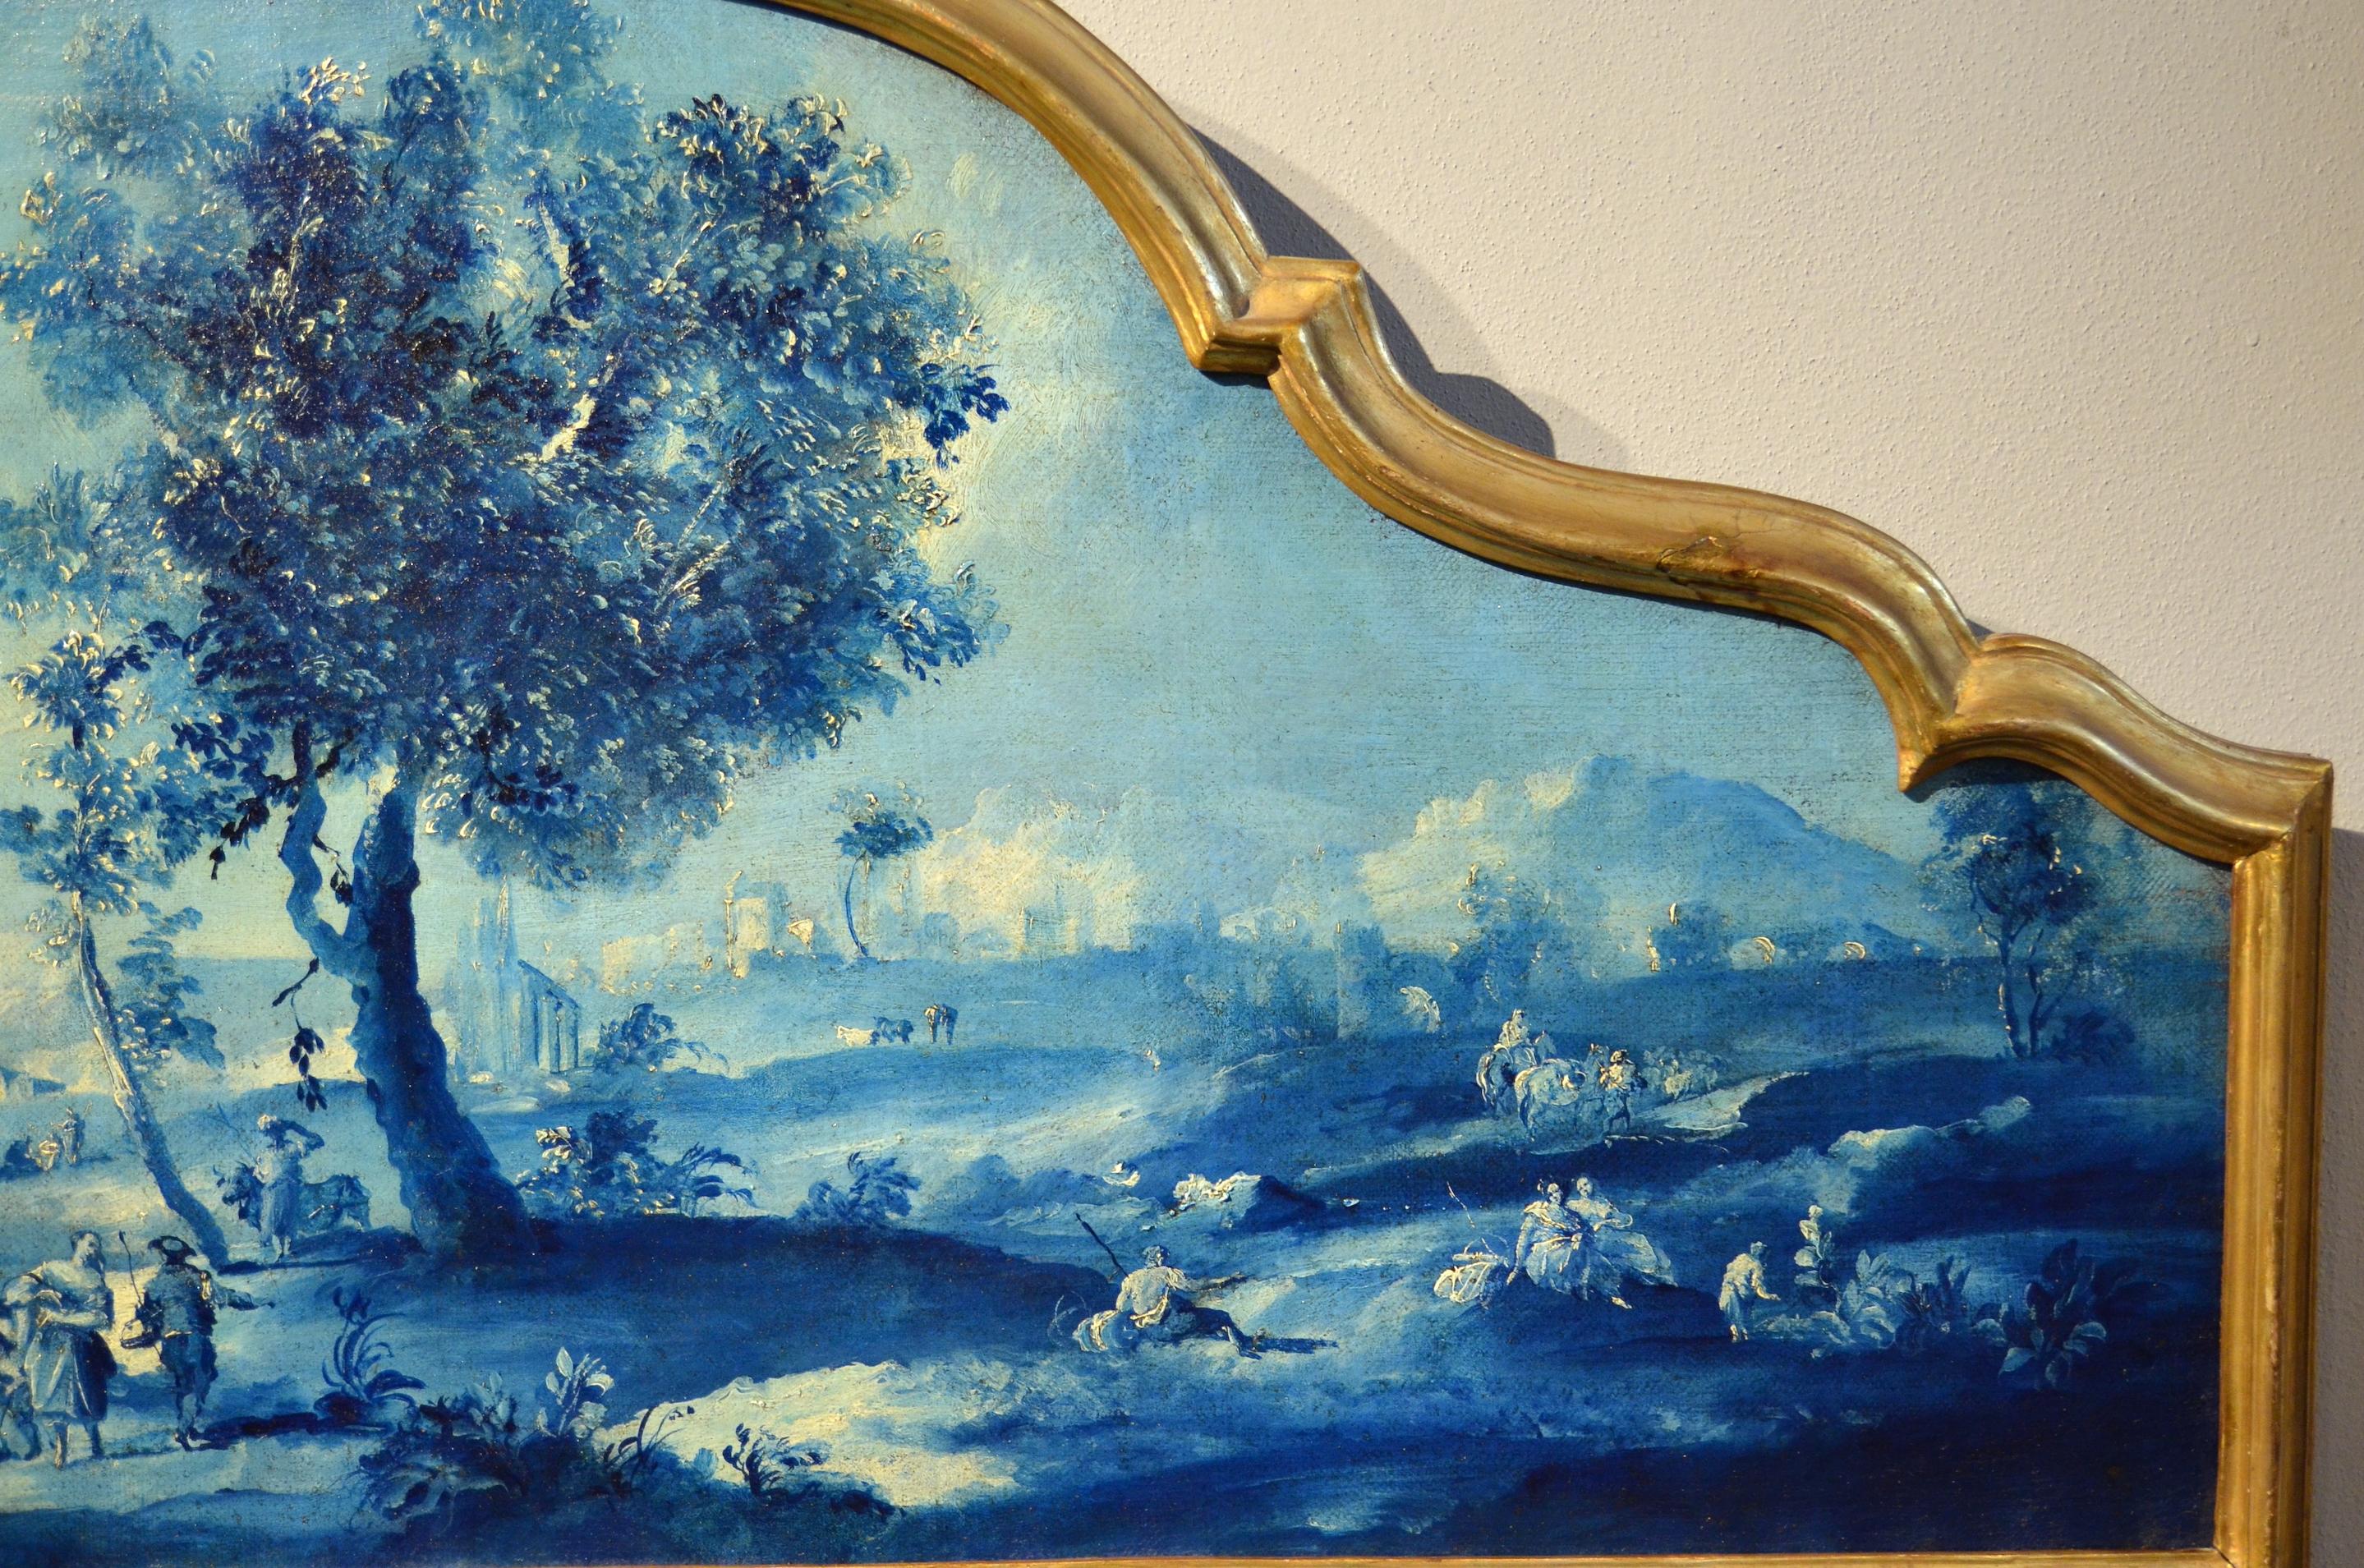 Paint Oil on canvas Pair Landscape Wood See Lake Venezia Italy Baroque Ricci Art 4